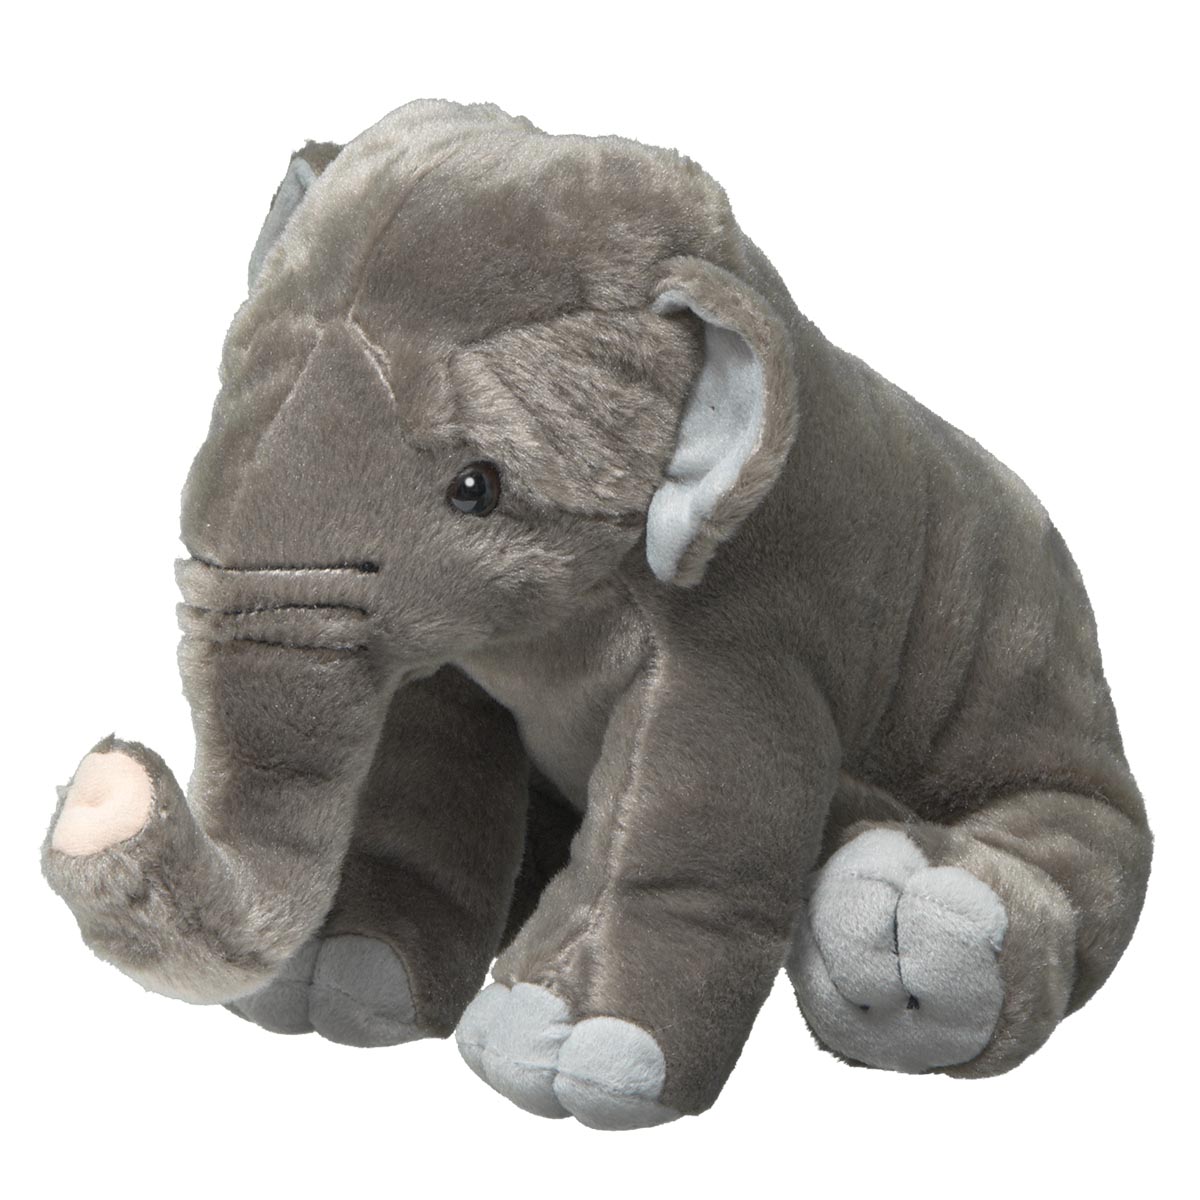 Adopt a Bornean Elephant  Asian elephant symbolic adoption from WWF